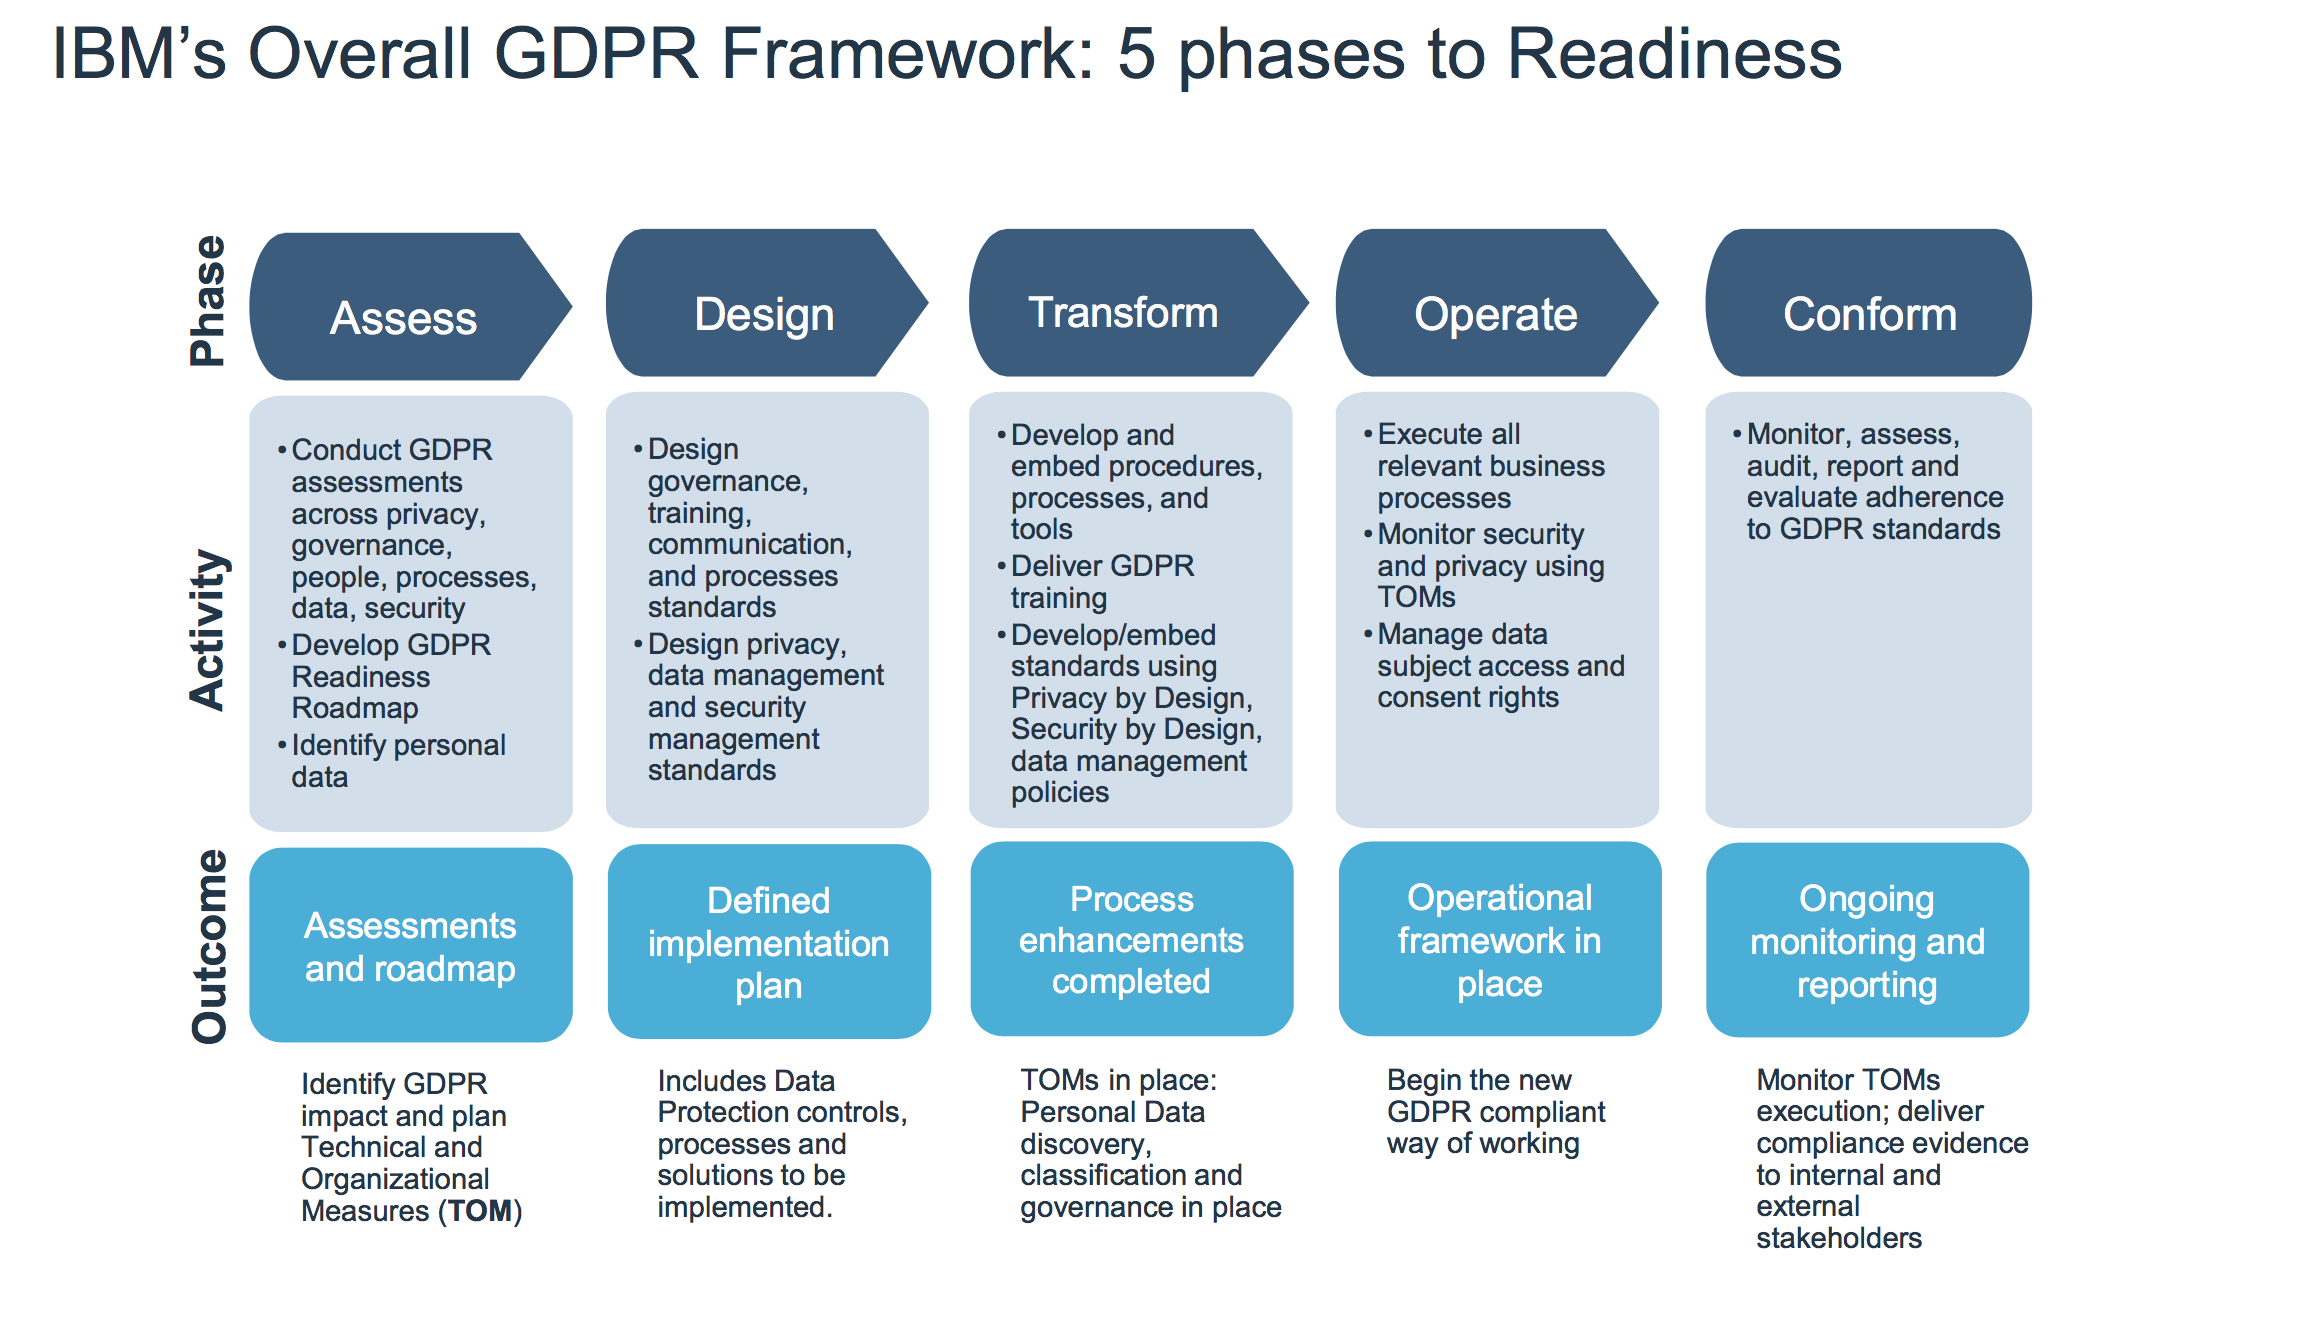 IBM’s GDPR Framework